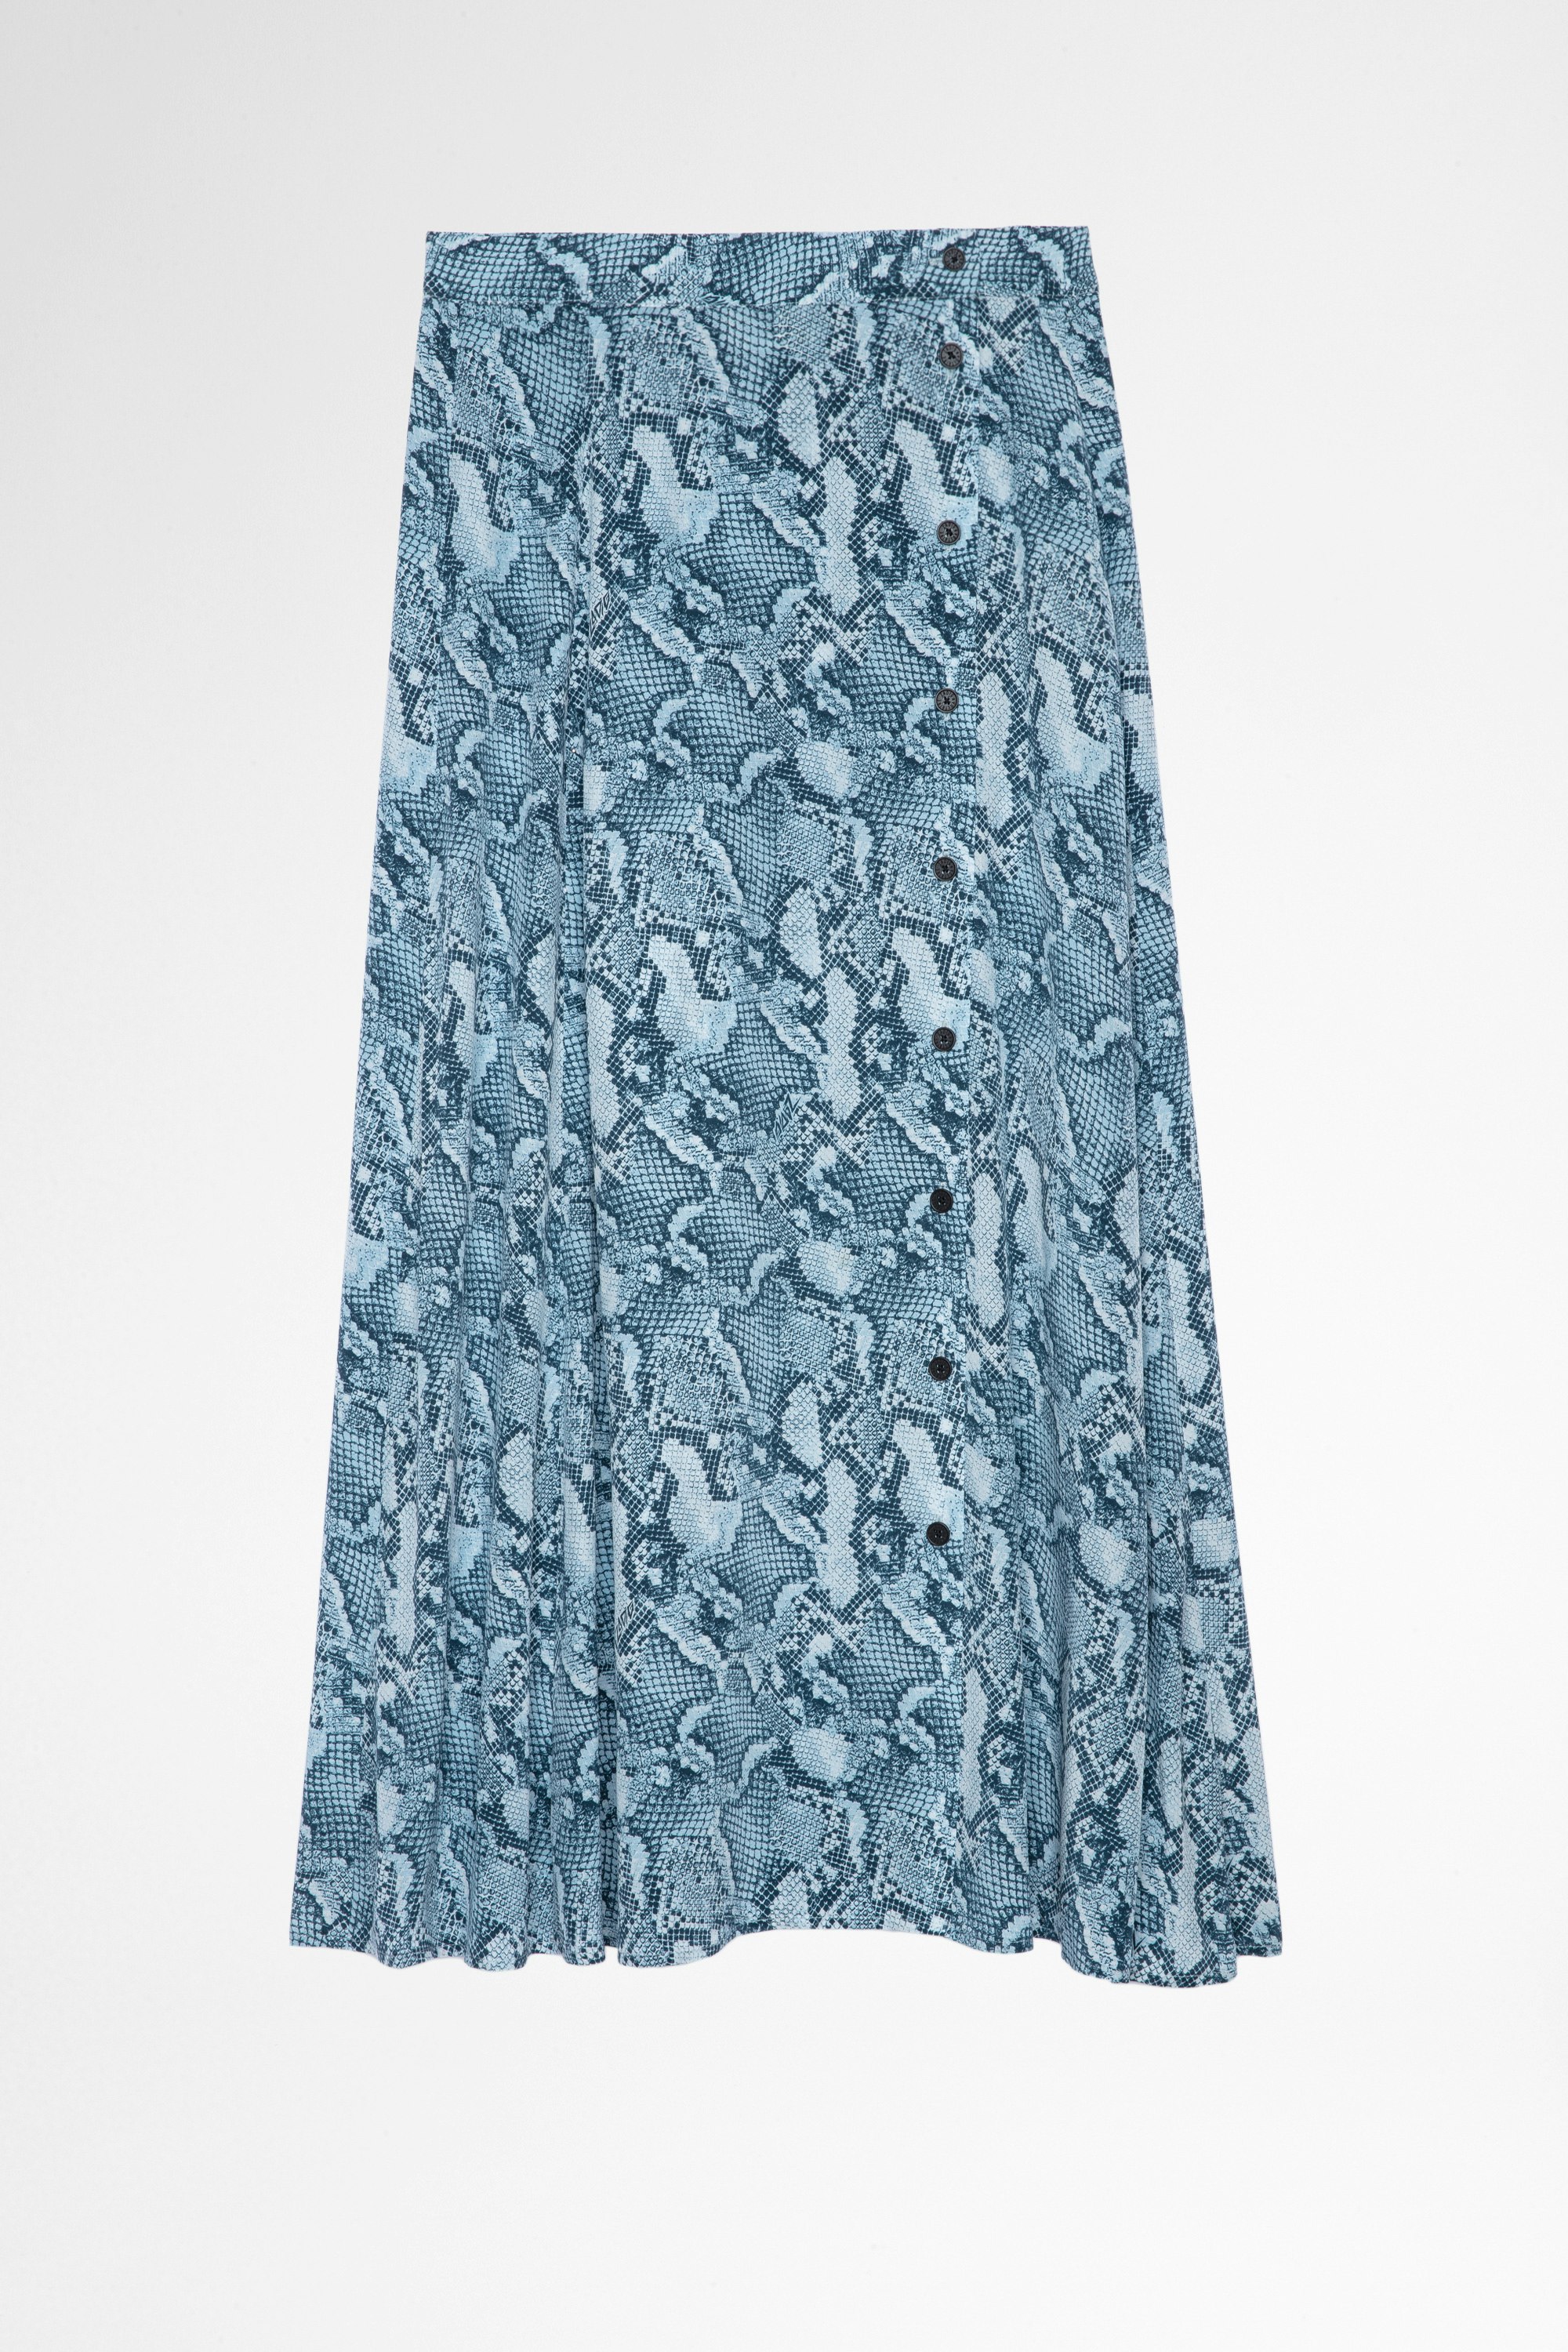 June Silk Skirt Women's long skirt in blue silk with snake print and buttons